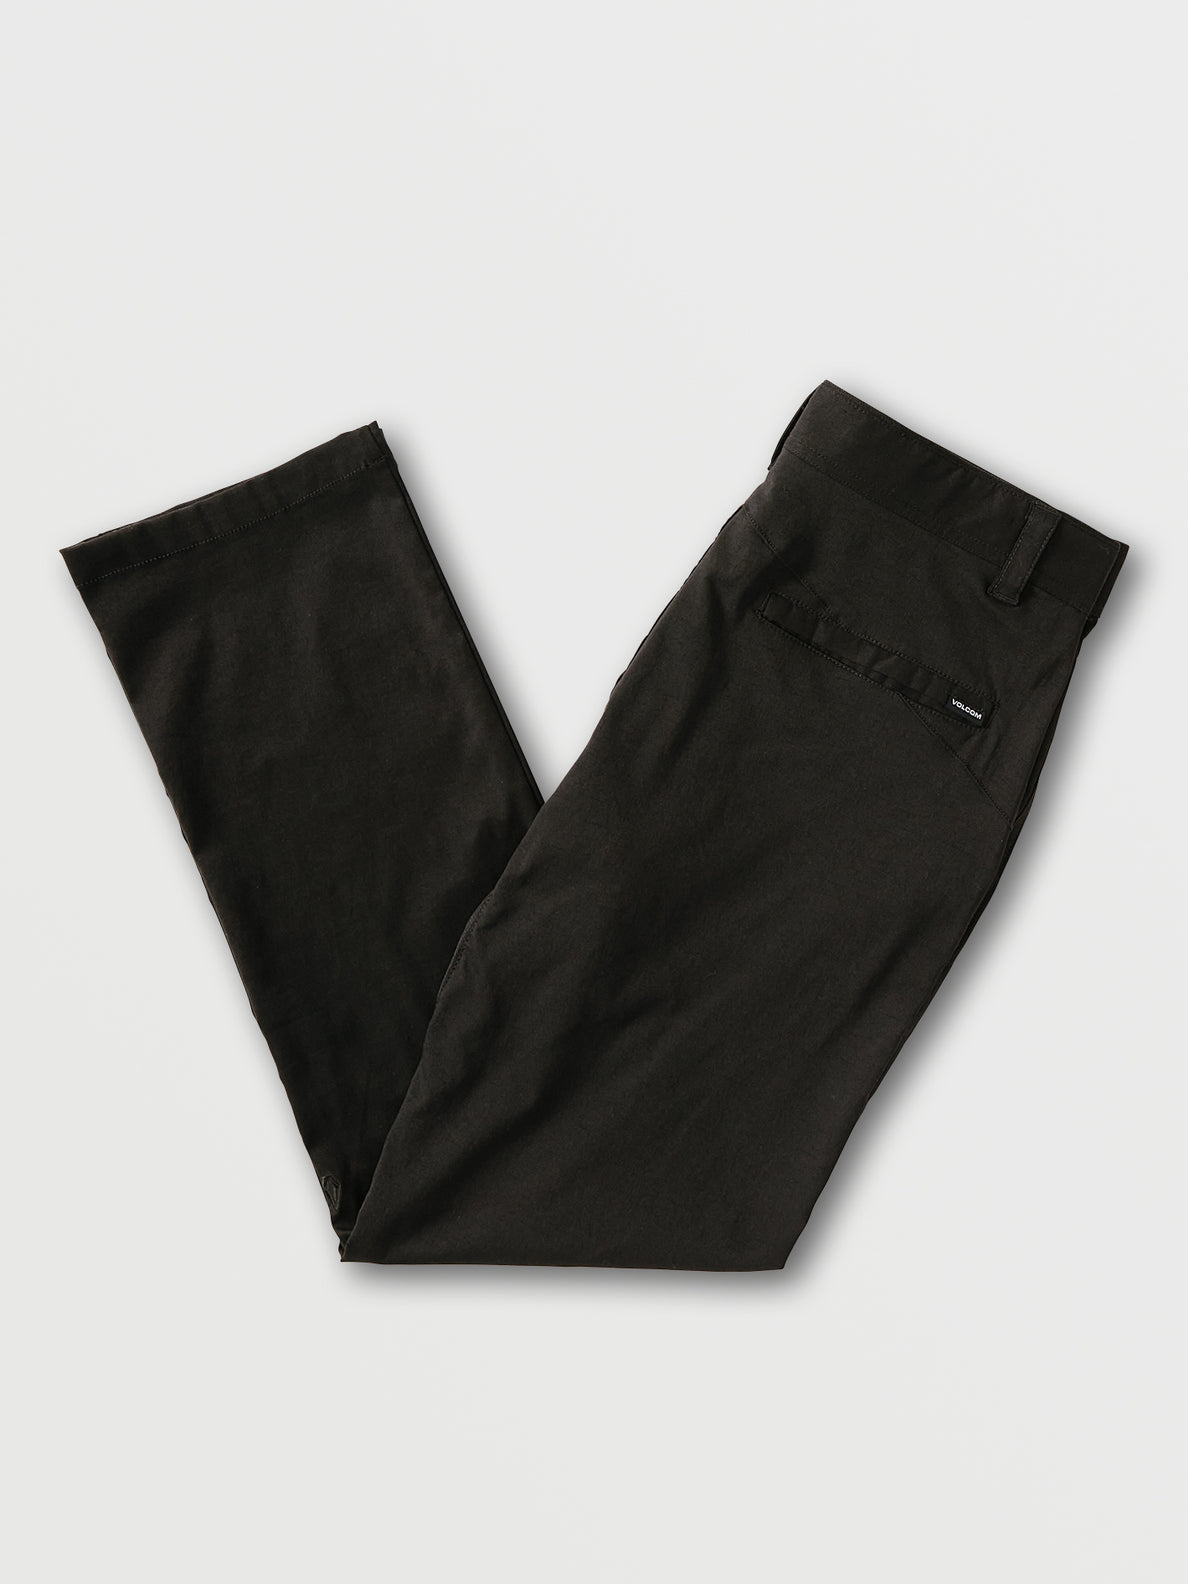 Frickin Tech Chino Pants - Black (A1132209_BLK) [B]